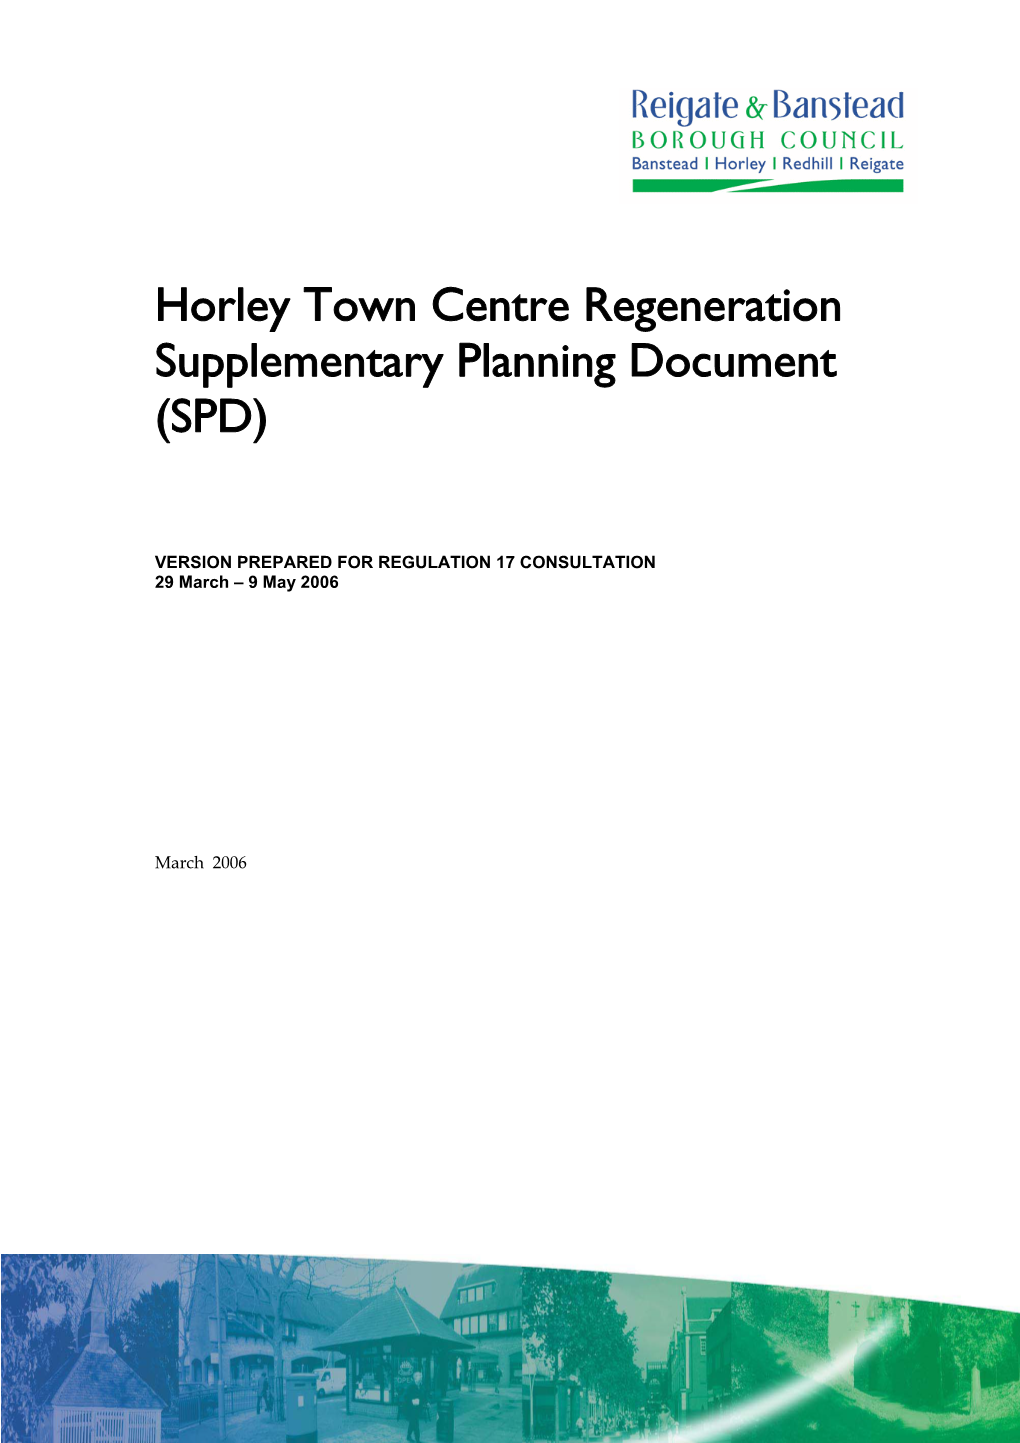 Horley Town Centre Regeneration Supplementary Planning Document (SPD)